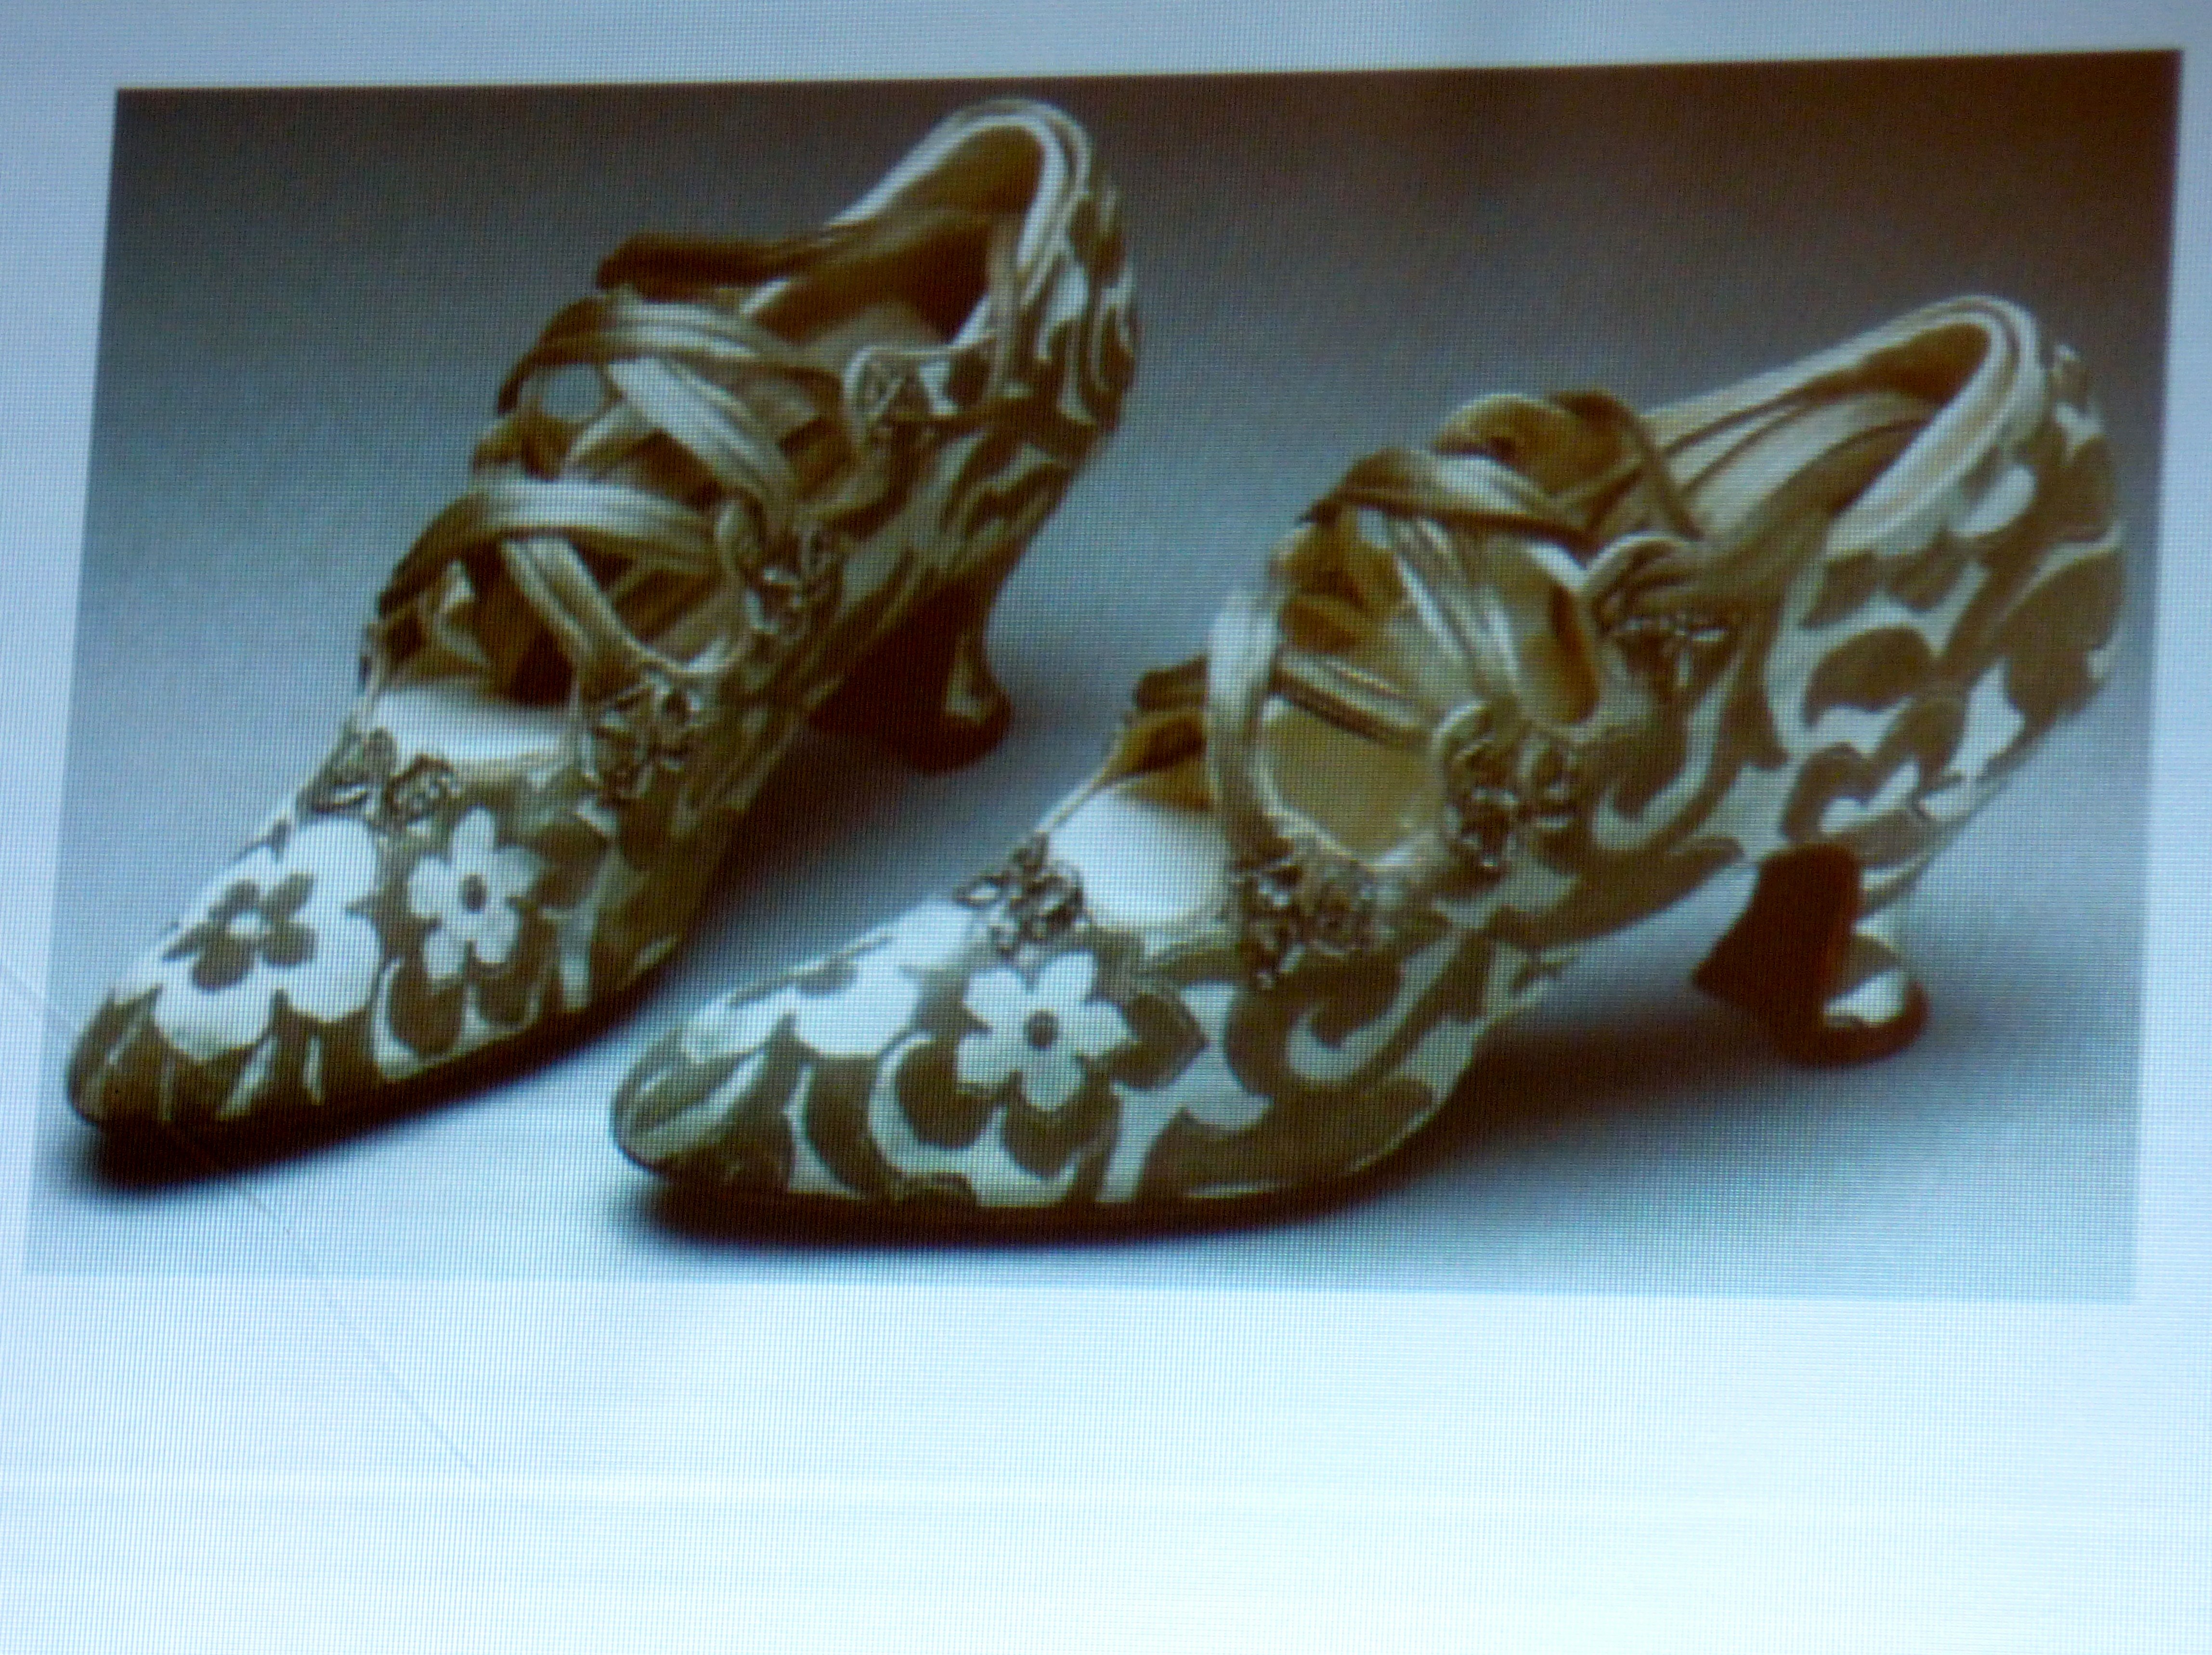 slide showing tango wedding shoes 1914